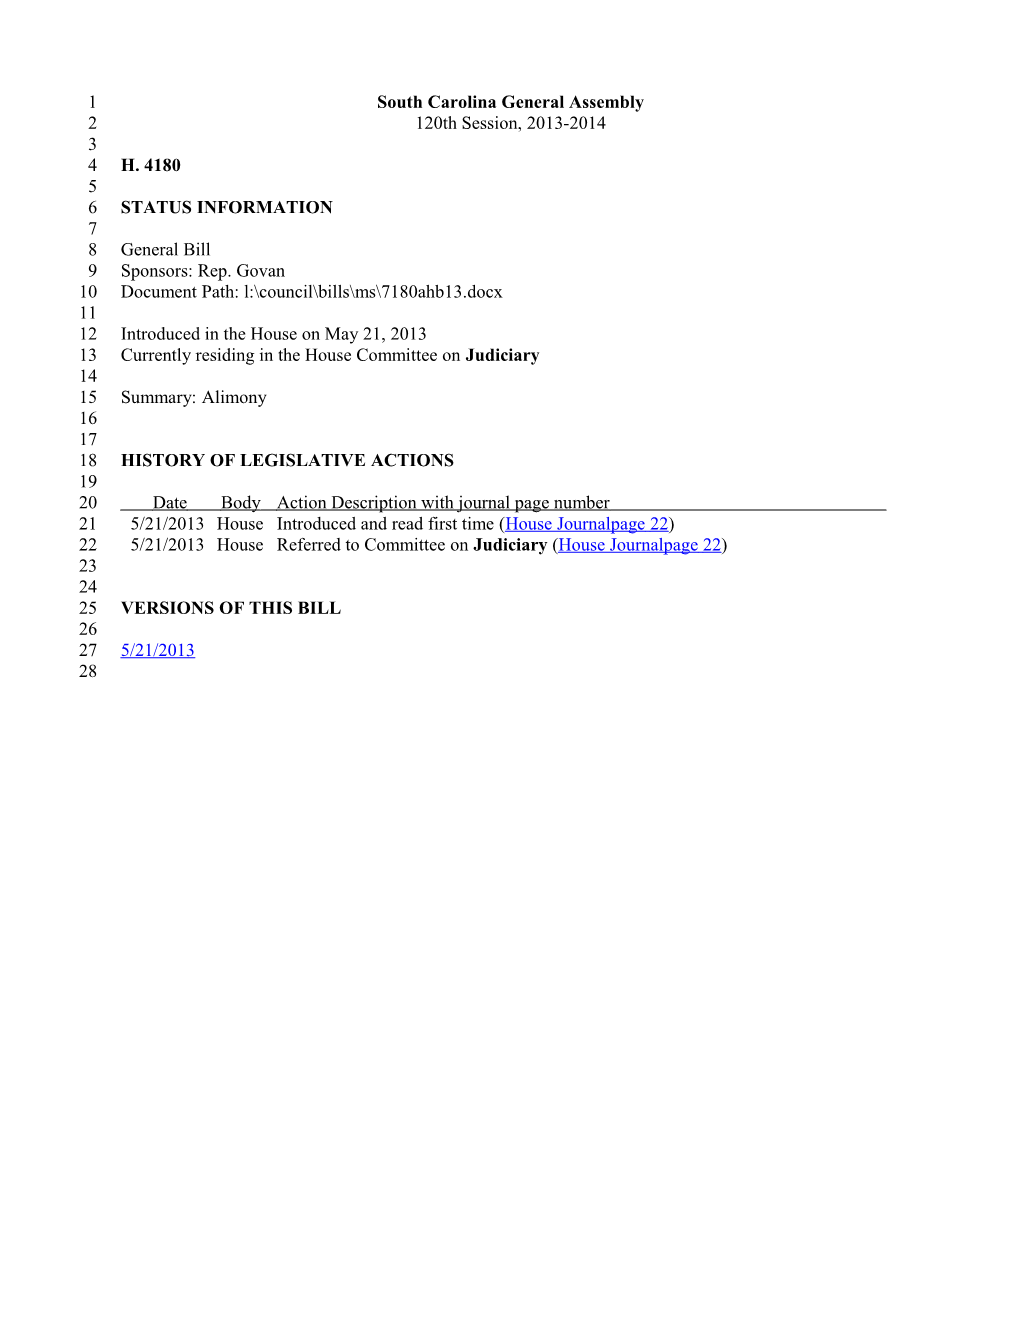 2013-2014 Bill 4180: Alimony - South Carolina Legislature Online